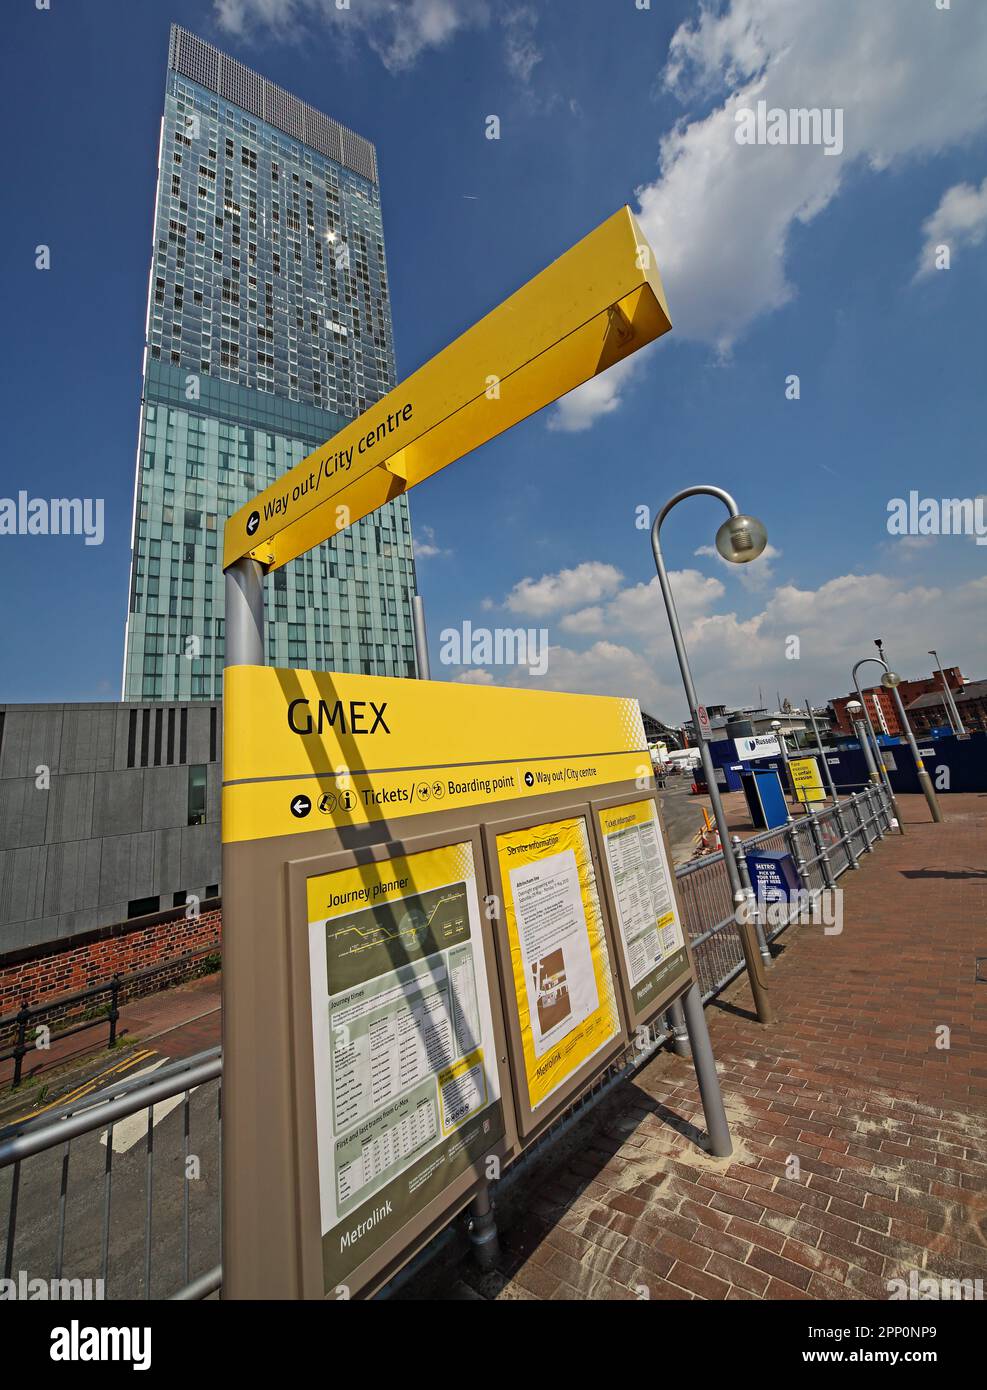 GMEX Metrolink tram stop platform Manchester, now Deansgate Castlefield, central Manchester, England, UK, M3 4LG Stock Photo